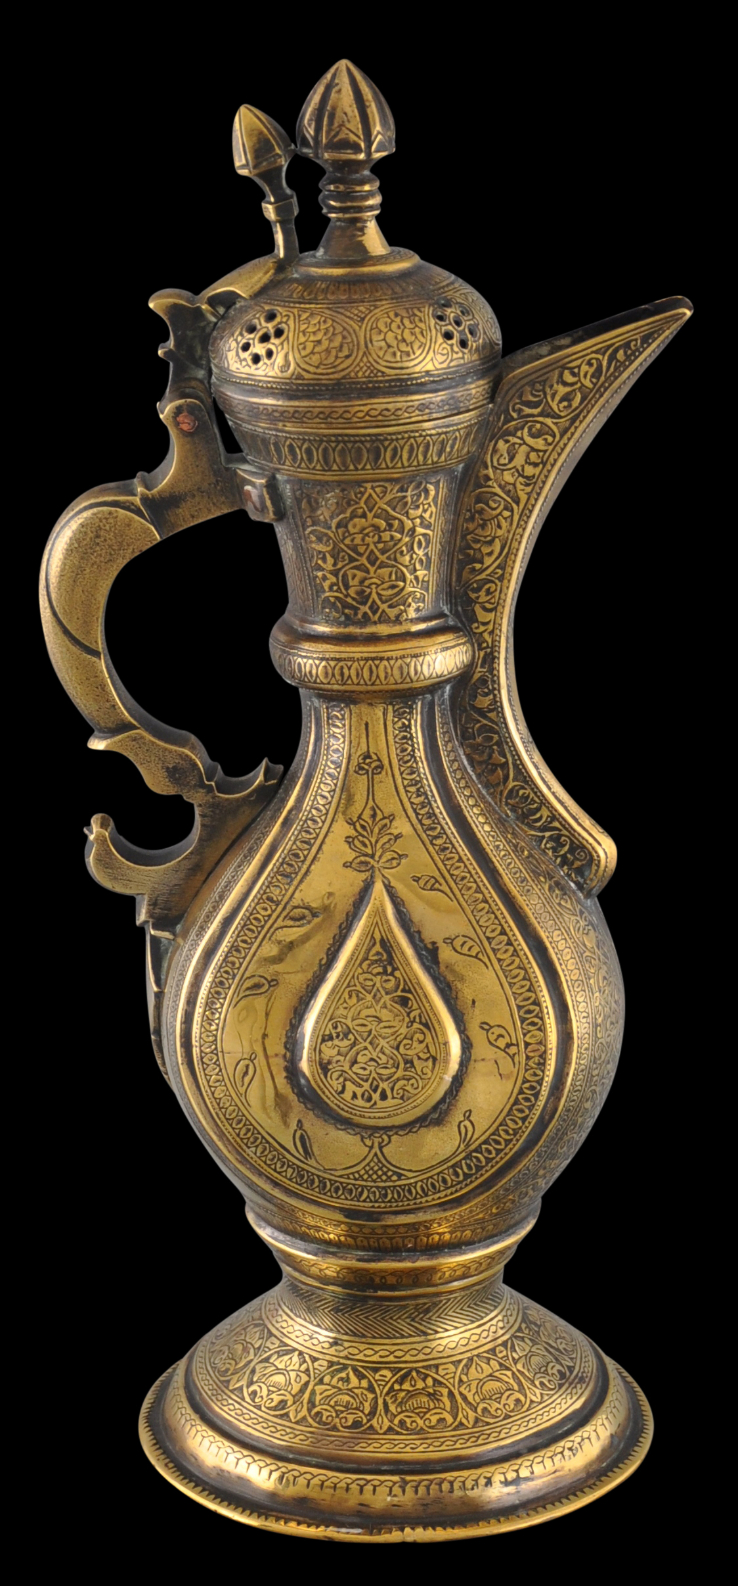 Bukharan Brass Teapot or Ewer - Michael Backman Ltd